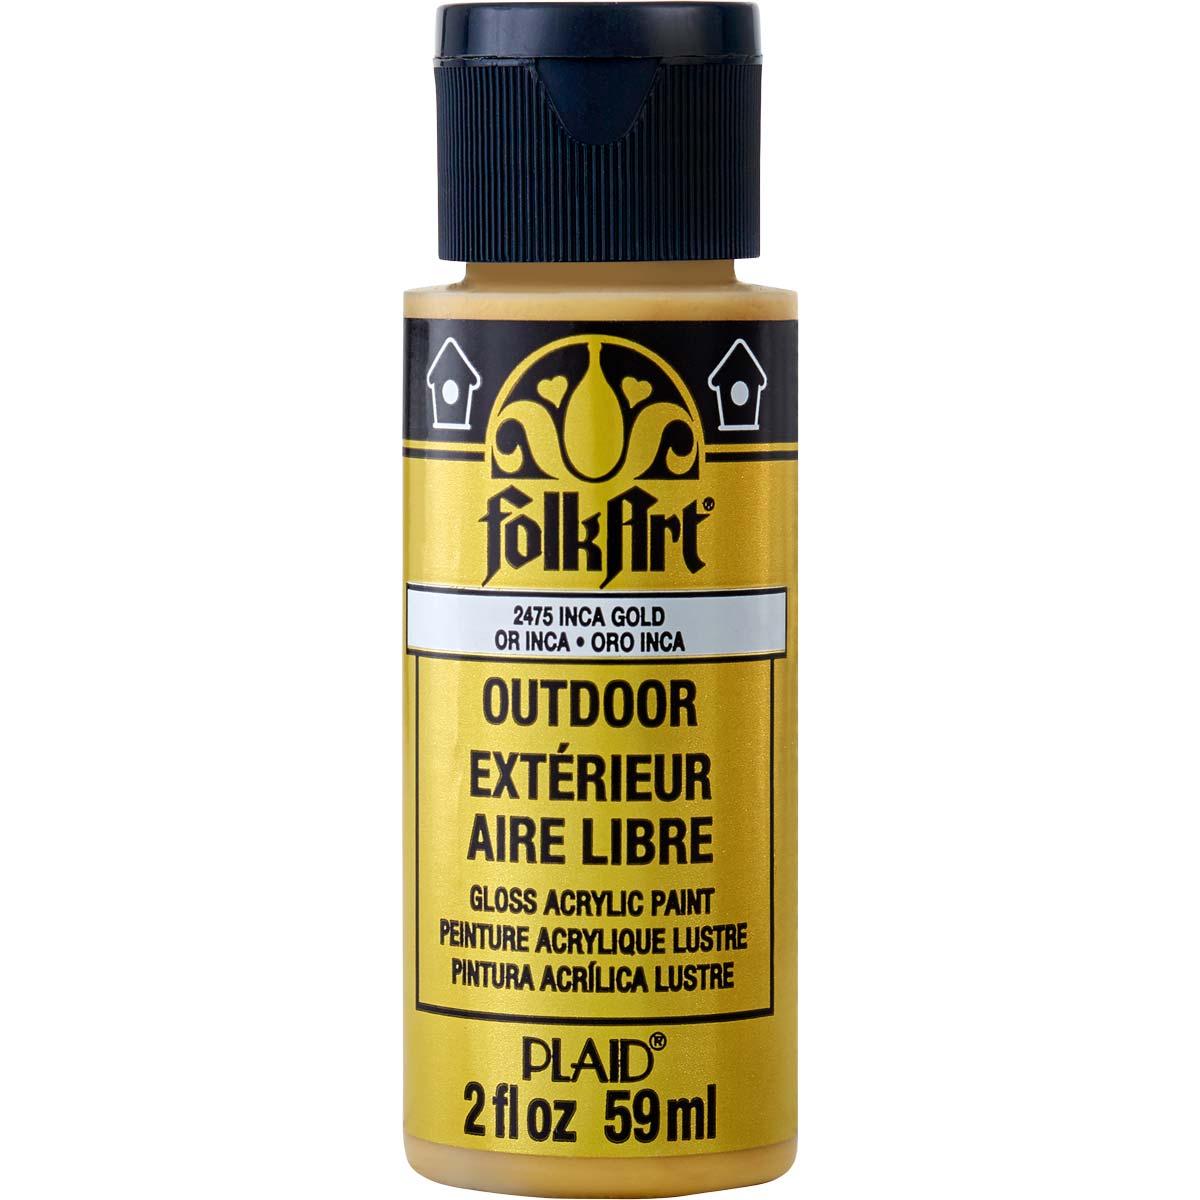 FolkArt ® Outdoor™ Acrylic Colors - Metallic - Inca Gold, 2 oz. - 2475